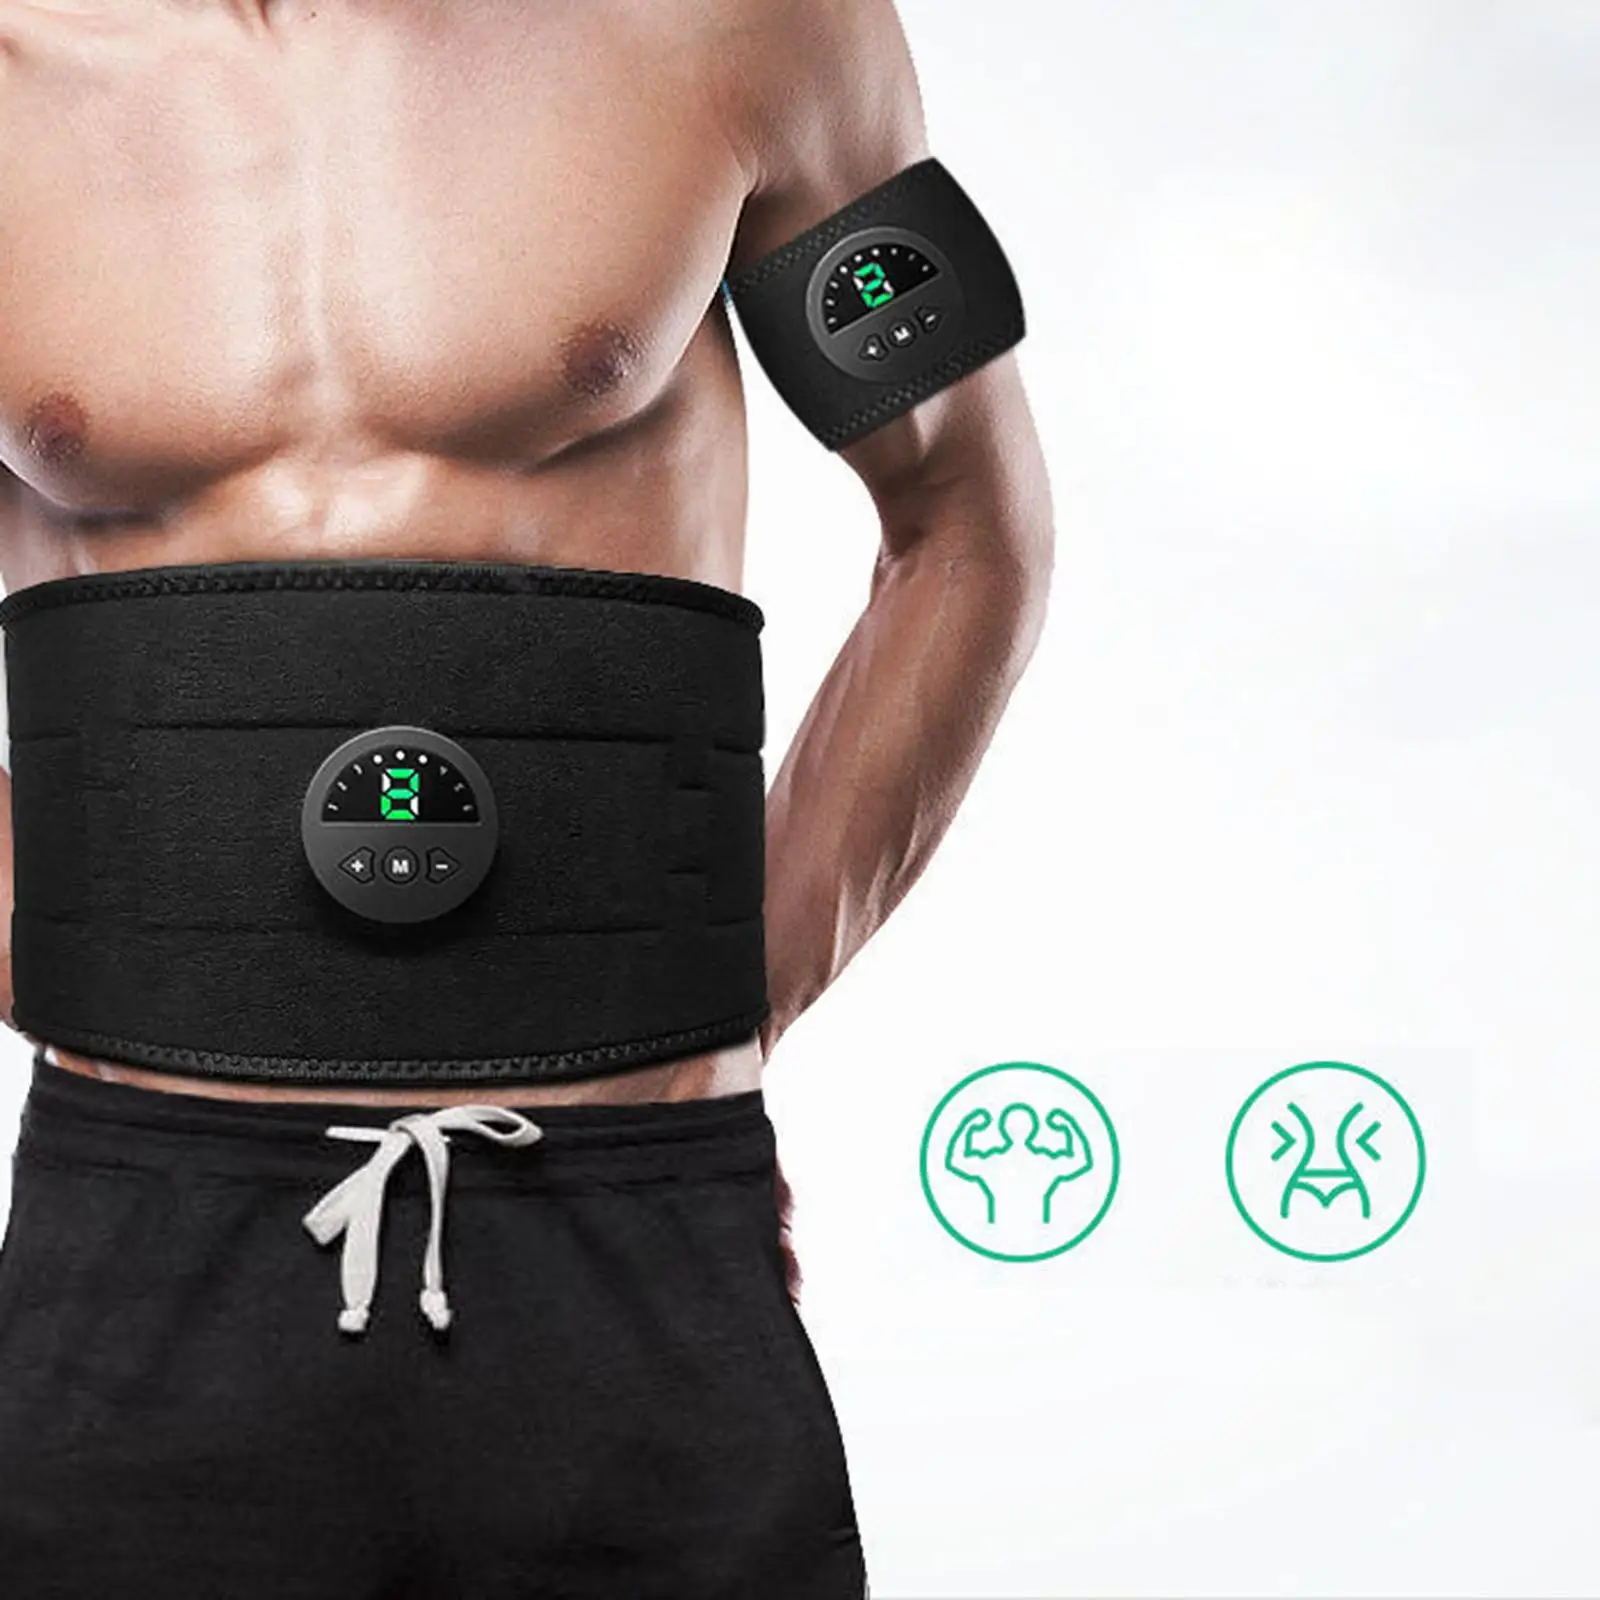 ABS Stimulating 6 Modes 9 intensities Abdominal Trainer Belt Gym Device Gear